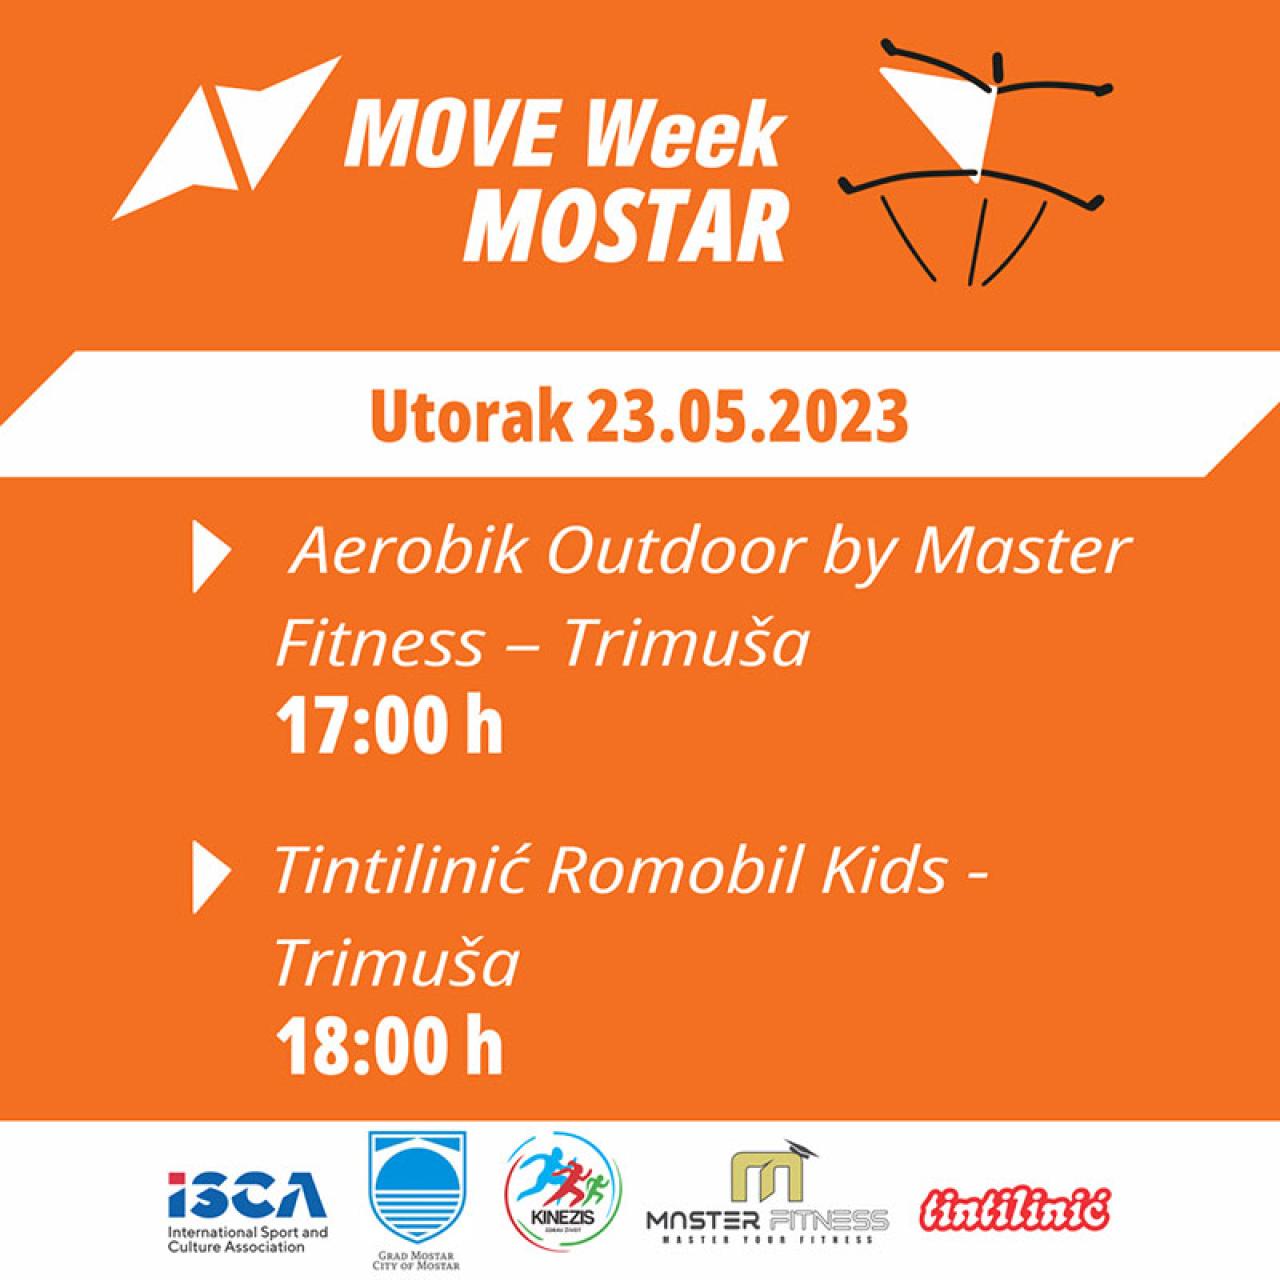 Mostar Move Week - utorak - Mostar ima odlične planinarske staze - Mostar Move Week